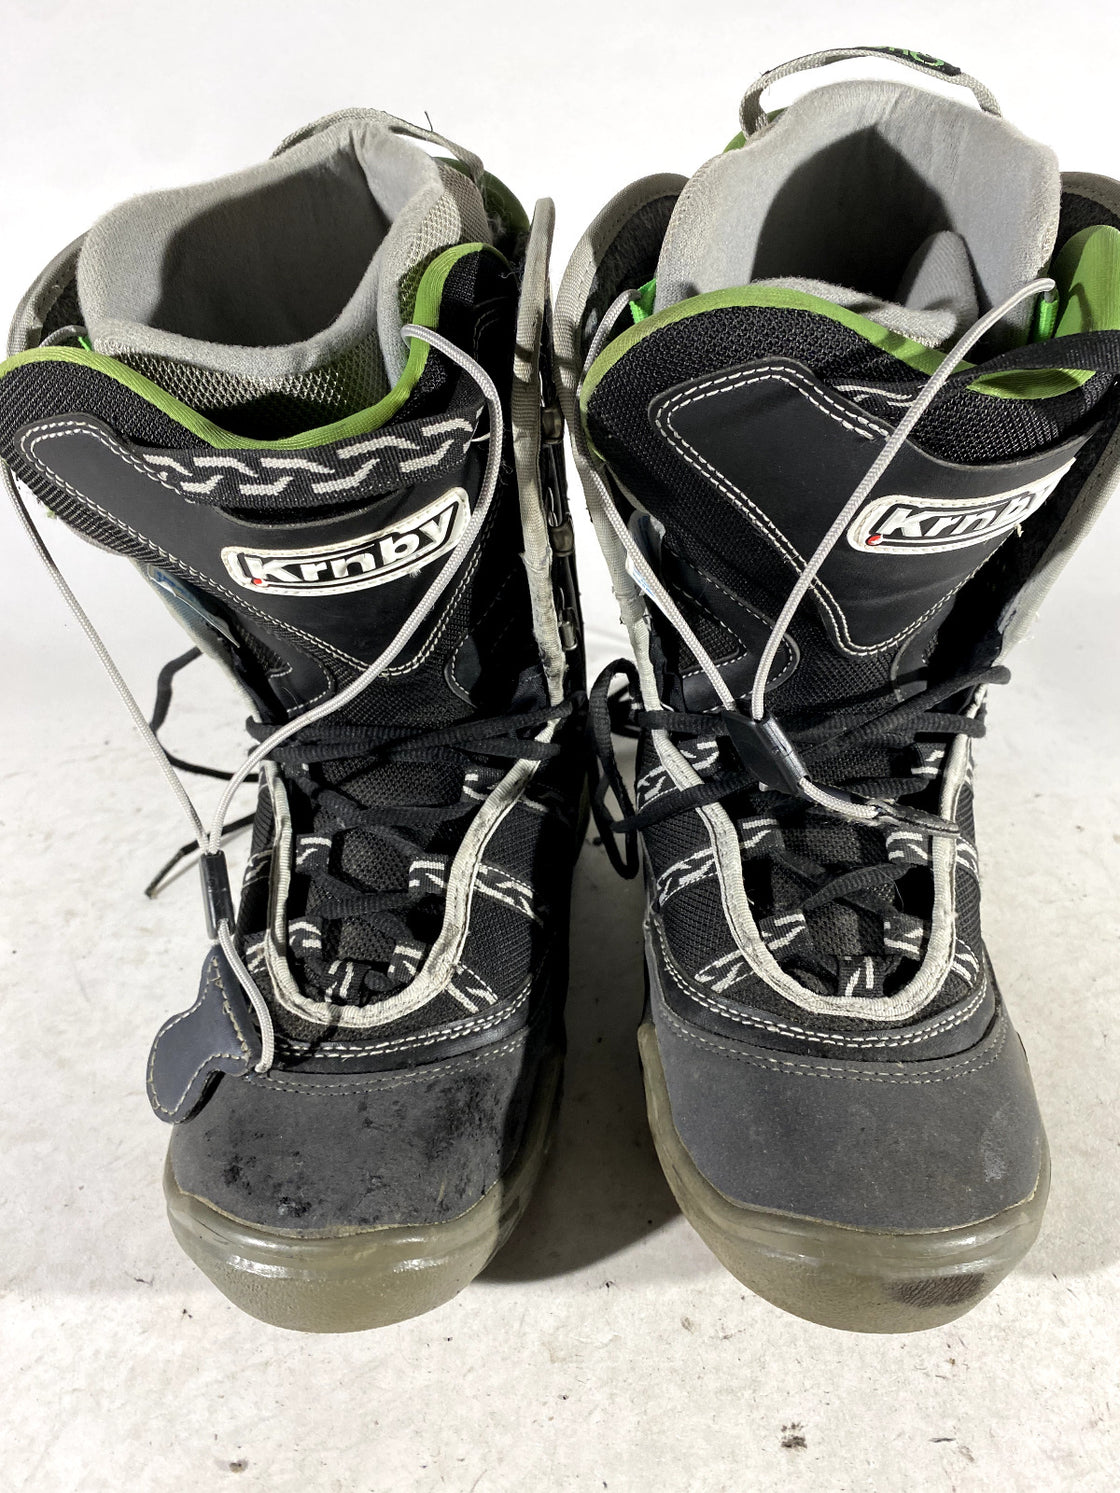 QUECHUA Snowboard Boots Size EU42 US8 1/3 UK7 2/3  Mondo 265 mm